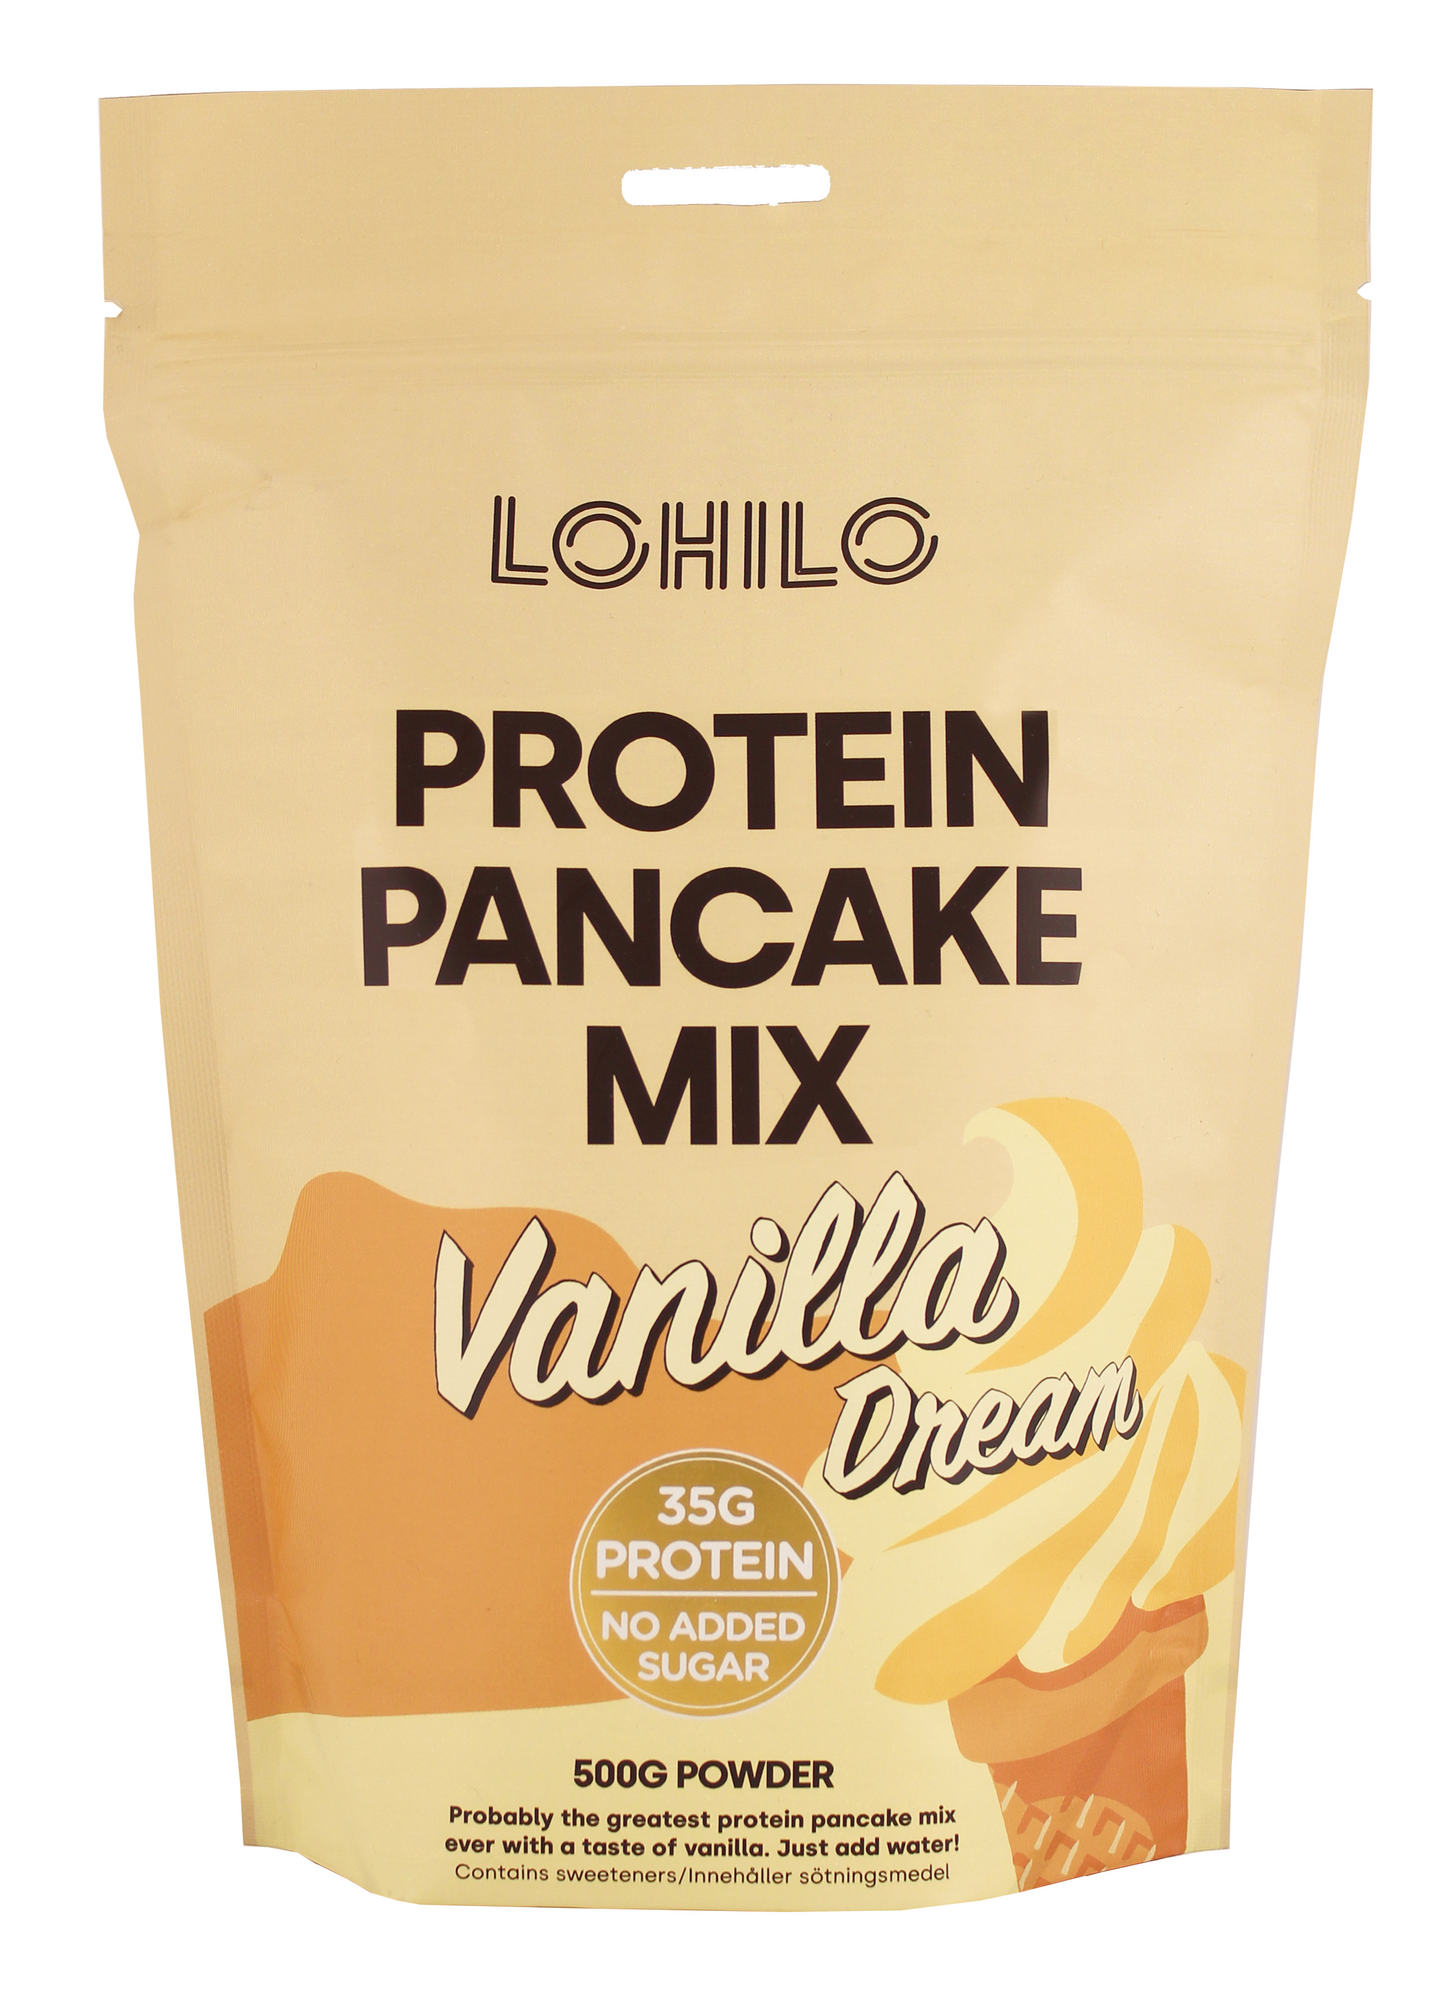 Lohilo Protein Pancake Mix Vanilla Dream 500g